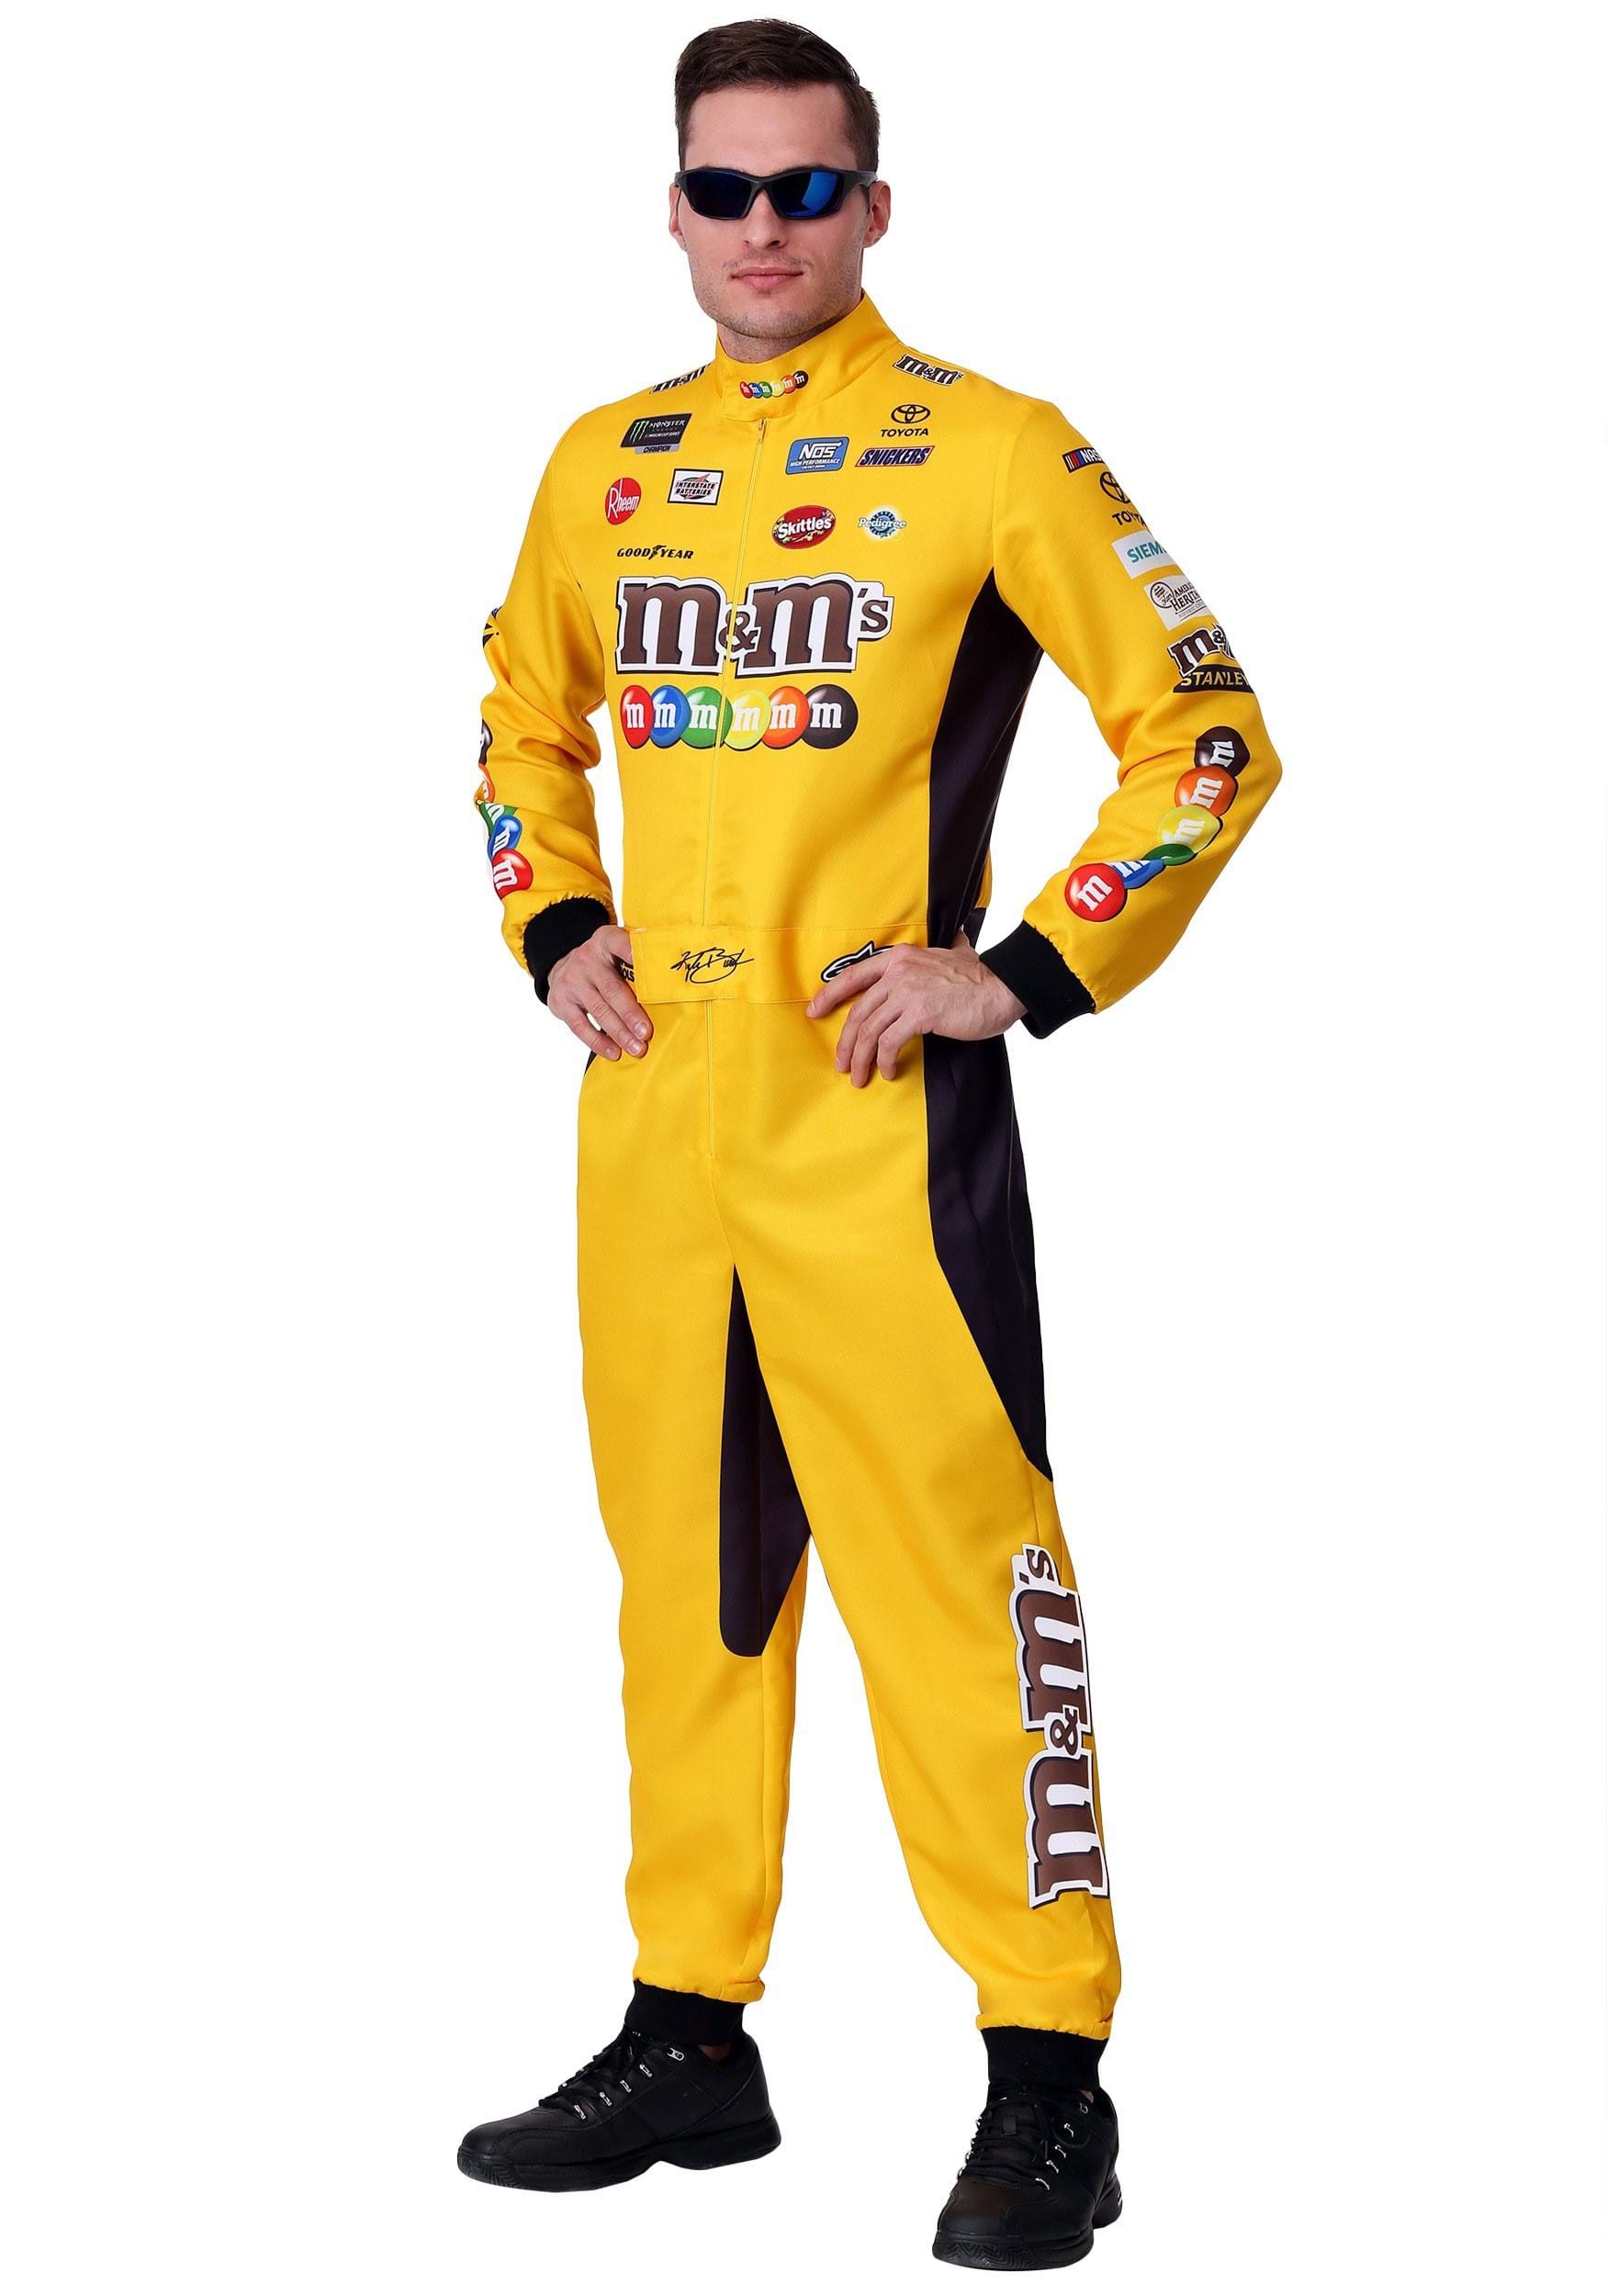 Plus Size Kyle Busch Uniform Costume from NASCAR